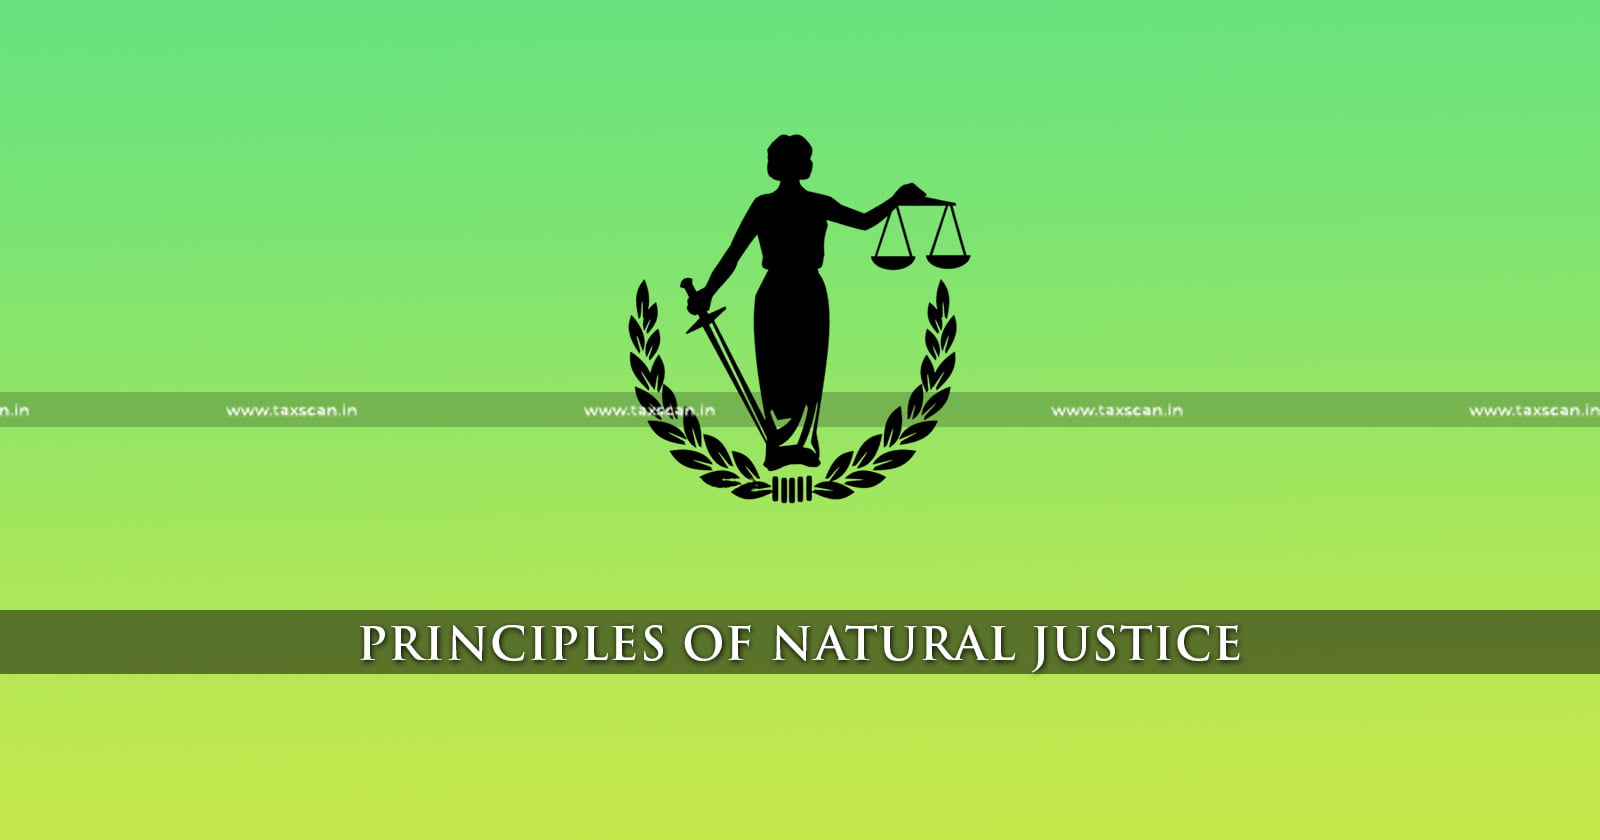 AO - Accommodation request - sale consideration - Delhi HC - Readjudication - Principles of natural justice - violation of principles of natural justice - Taxscan